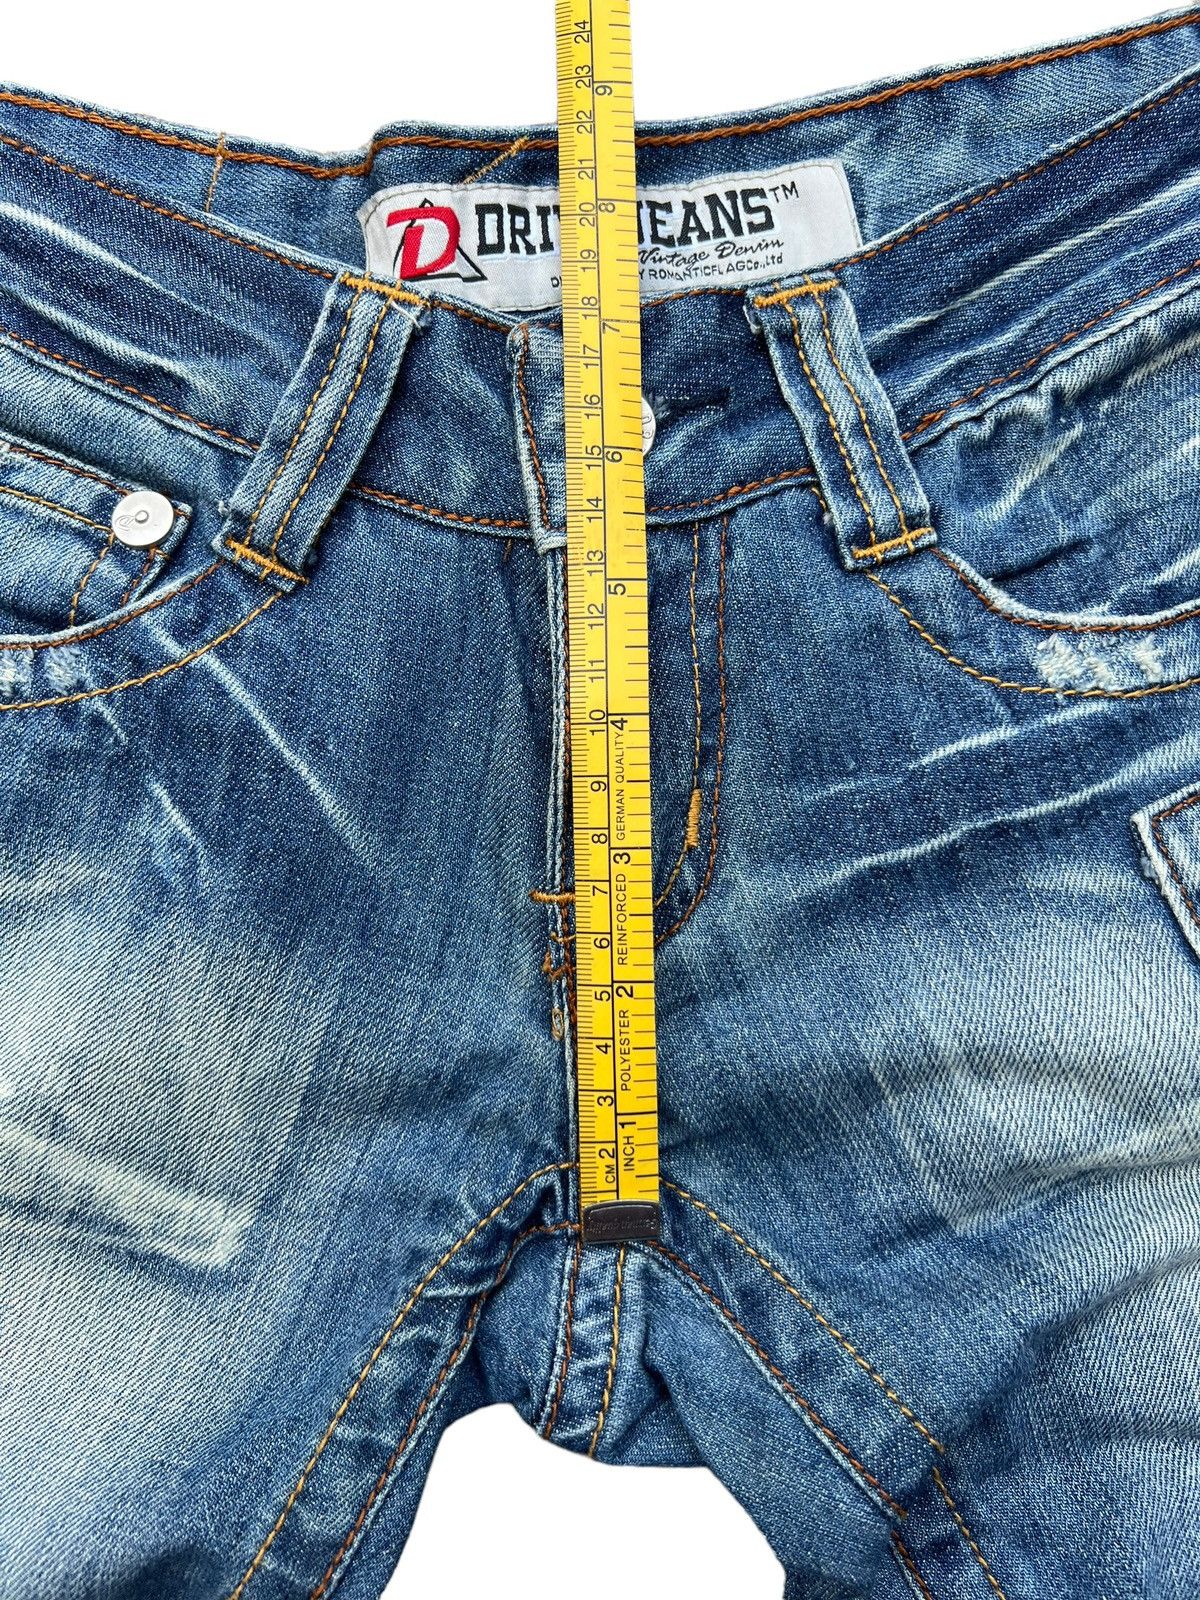 Hype - Drive Mud Wash Distressed Lowrise Denim Flare Jeans 28x32 - 13